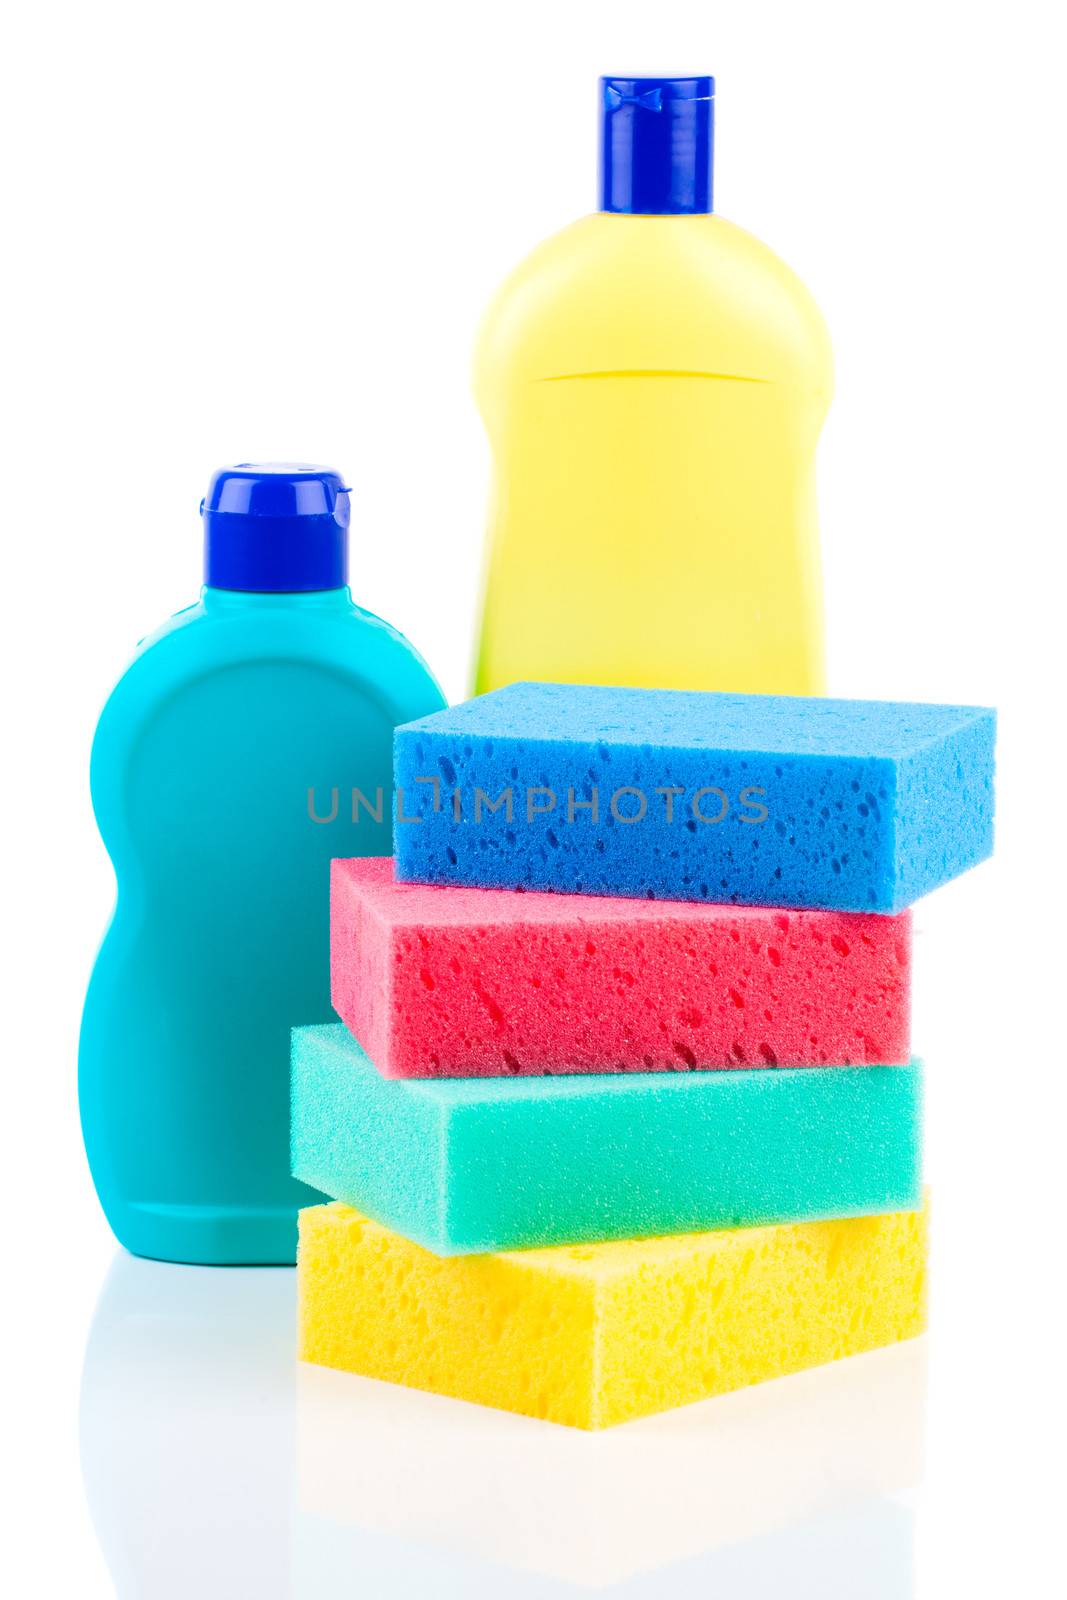 Plastic detergent bottles with sponges by motorolka